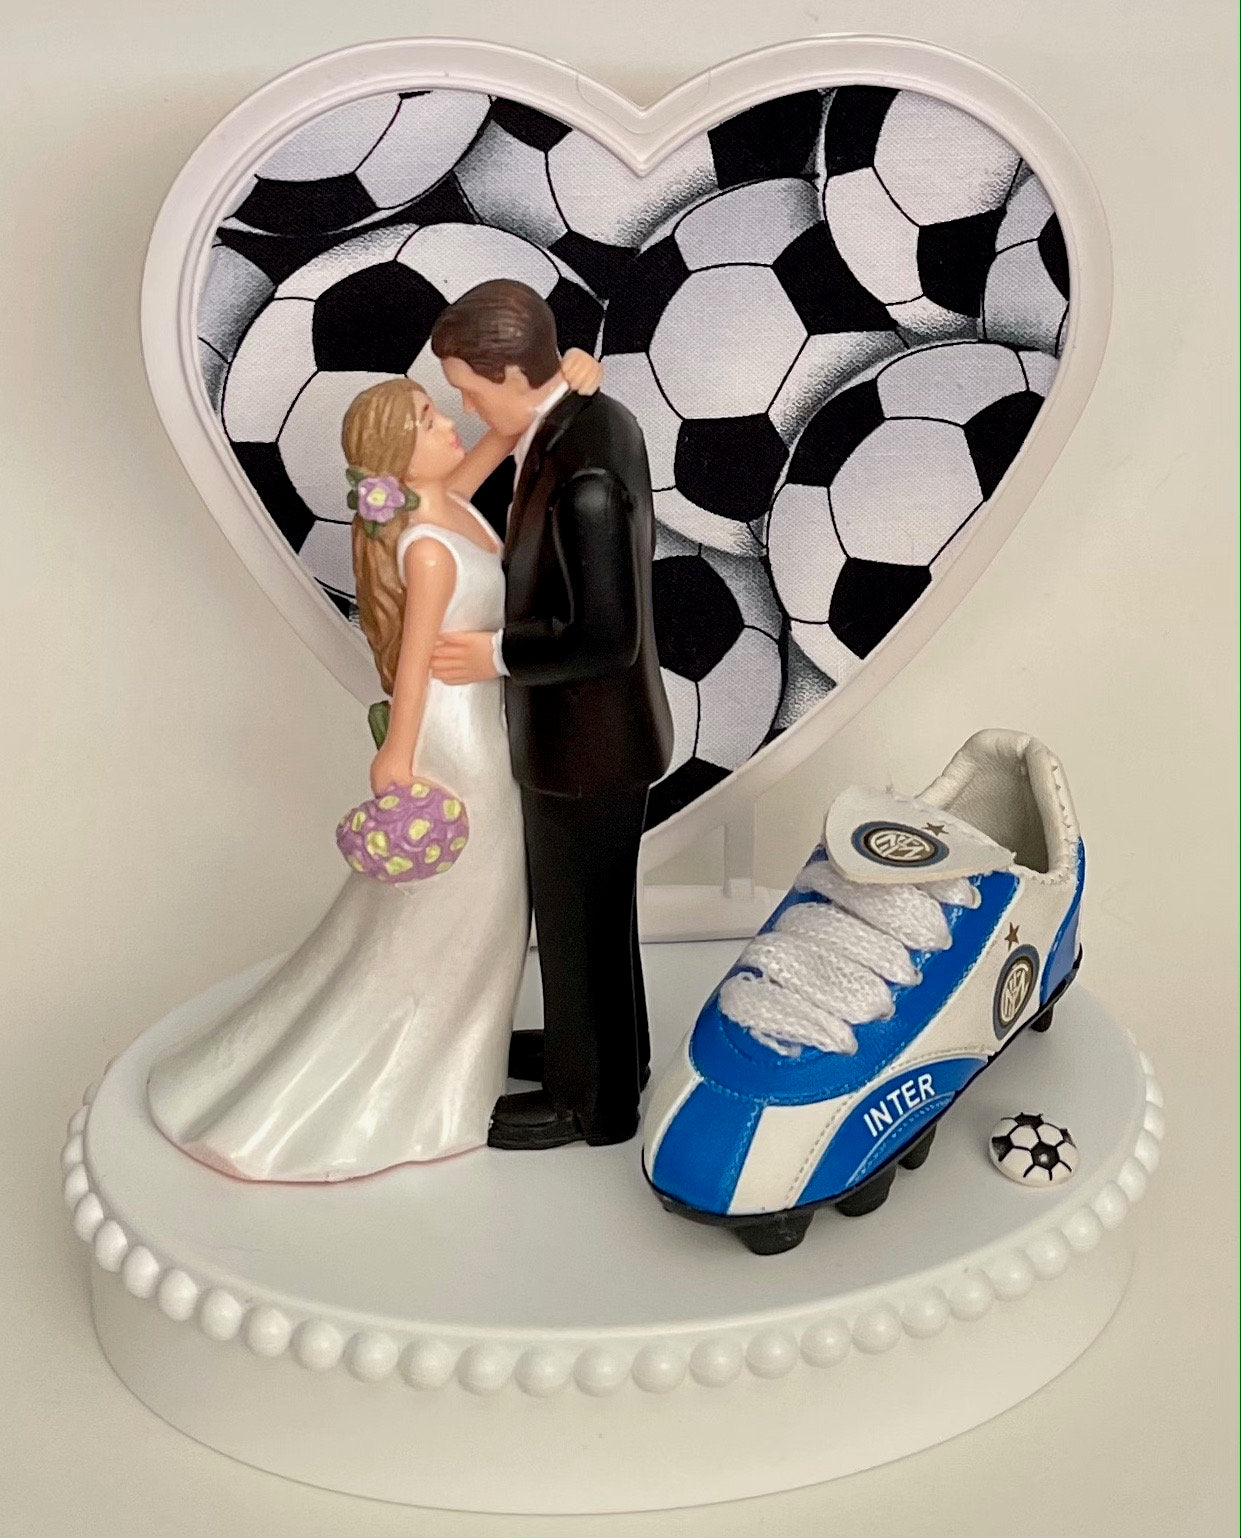 Wedding Cake Topper Inter Milan Soccer Themed Italian Football Italy Beautiful Long-Haired Bride Groom Groom's Cake Top Reception Gift Idea